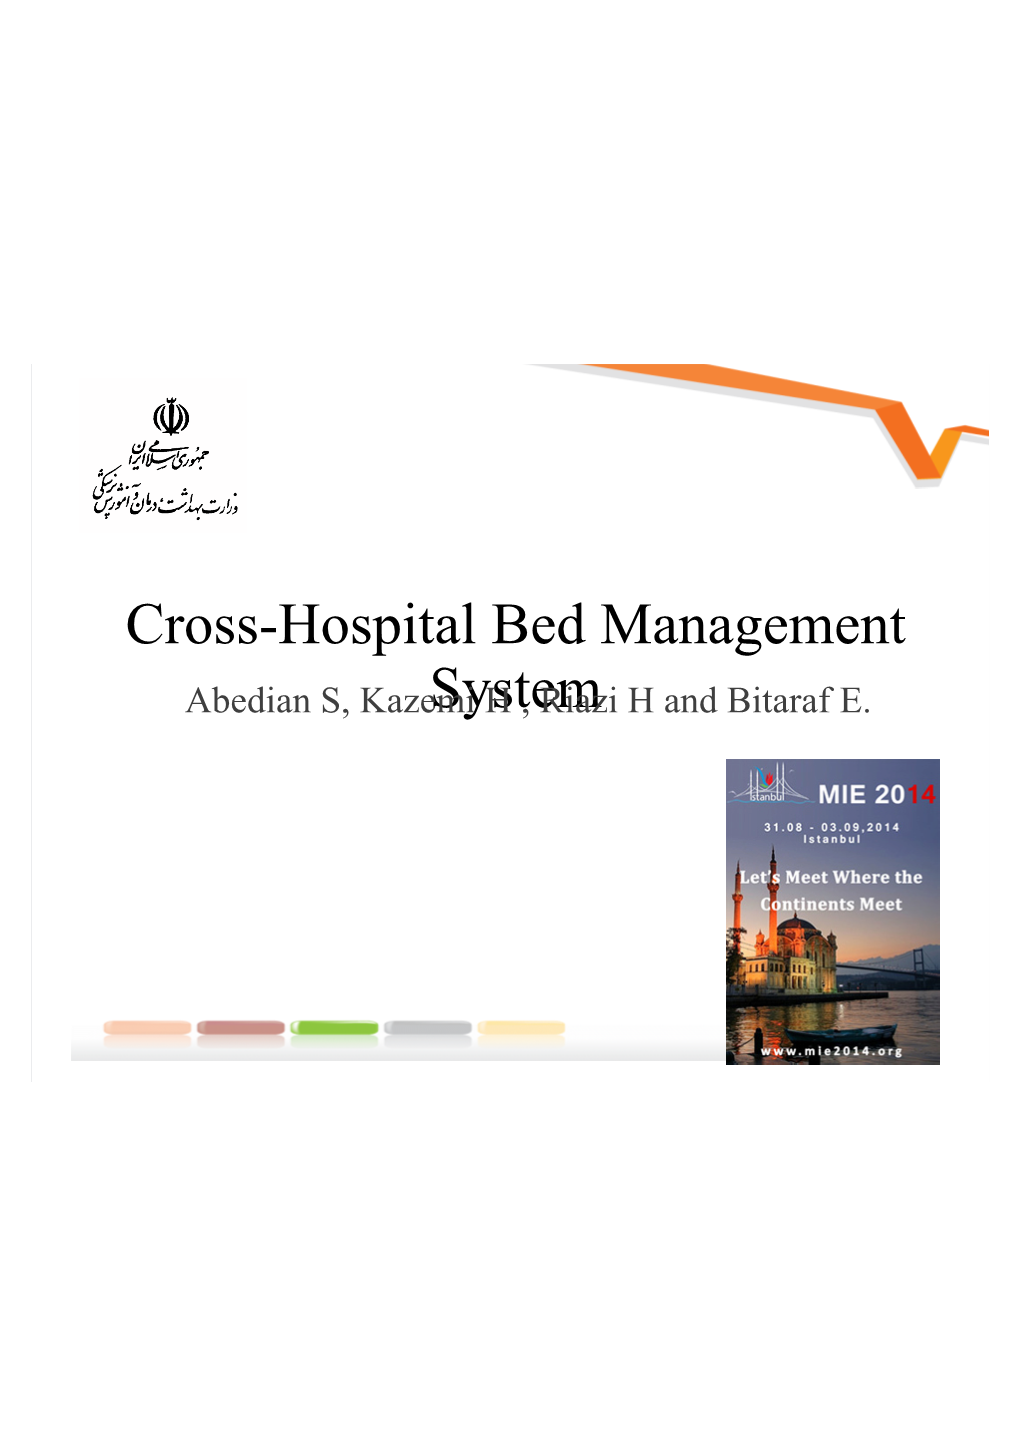 Cross-Hospital Bed Management System